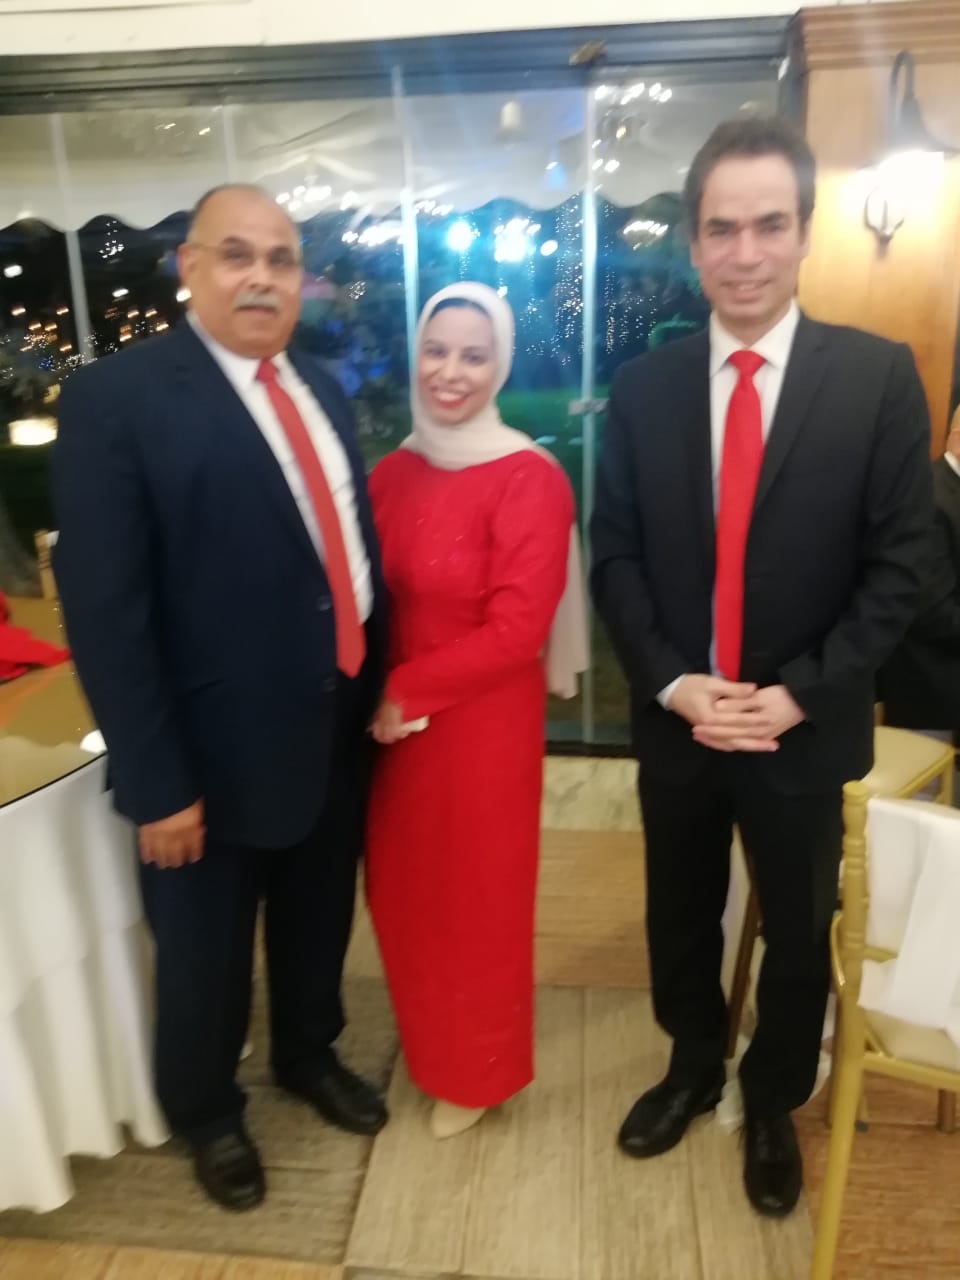 حفل زفاف شقيق محمد صلاح  (3)